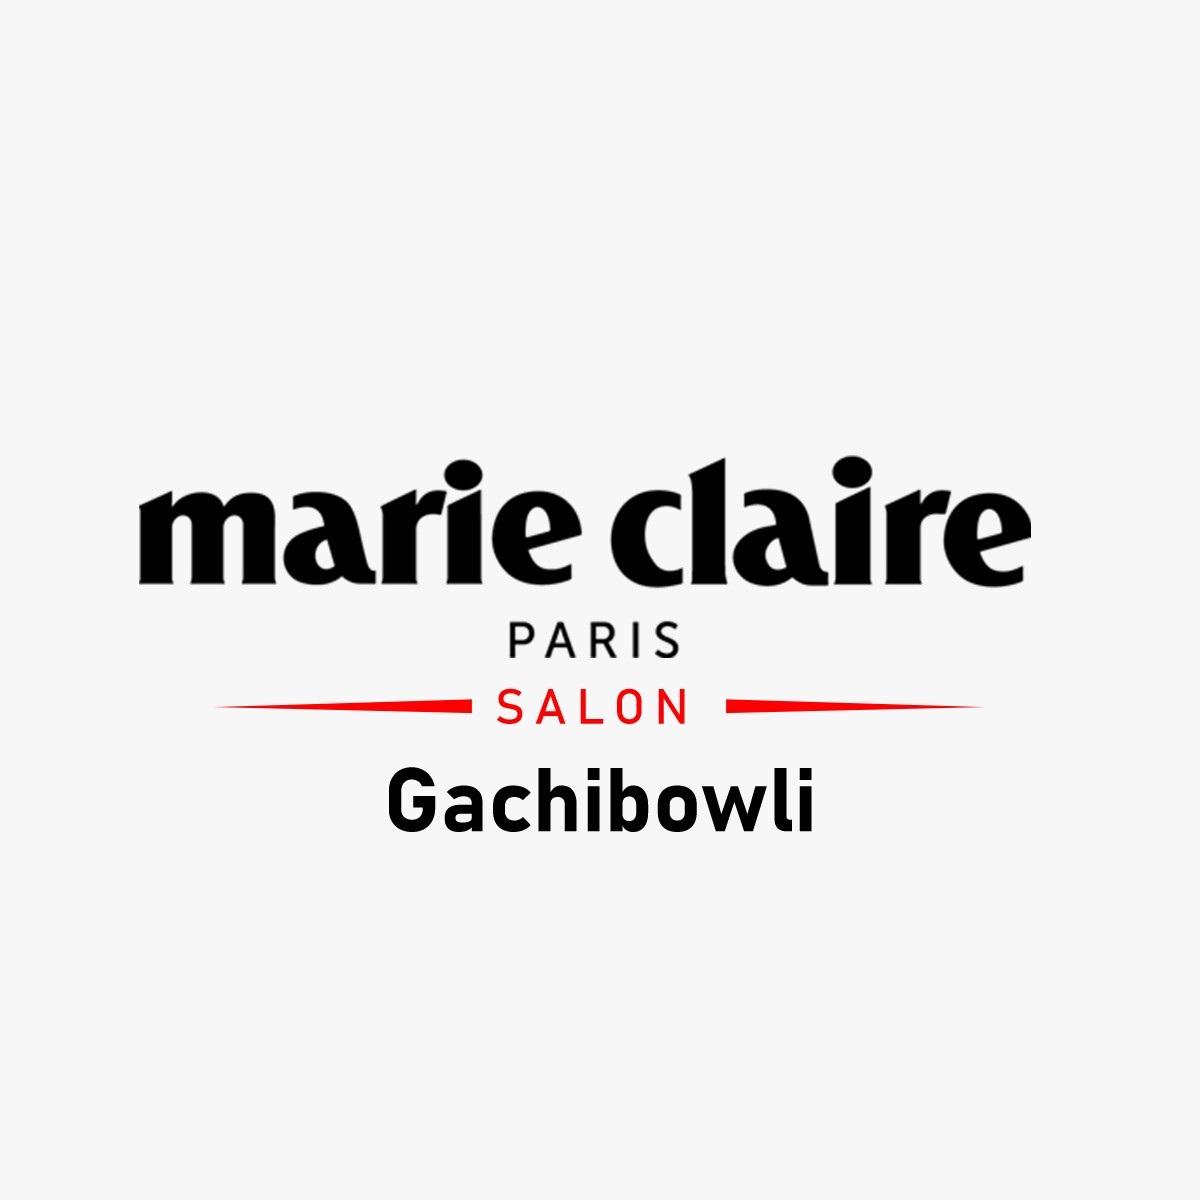 Marie Claire Paris Salon in Gachibowli